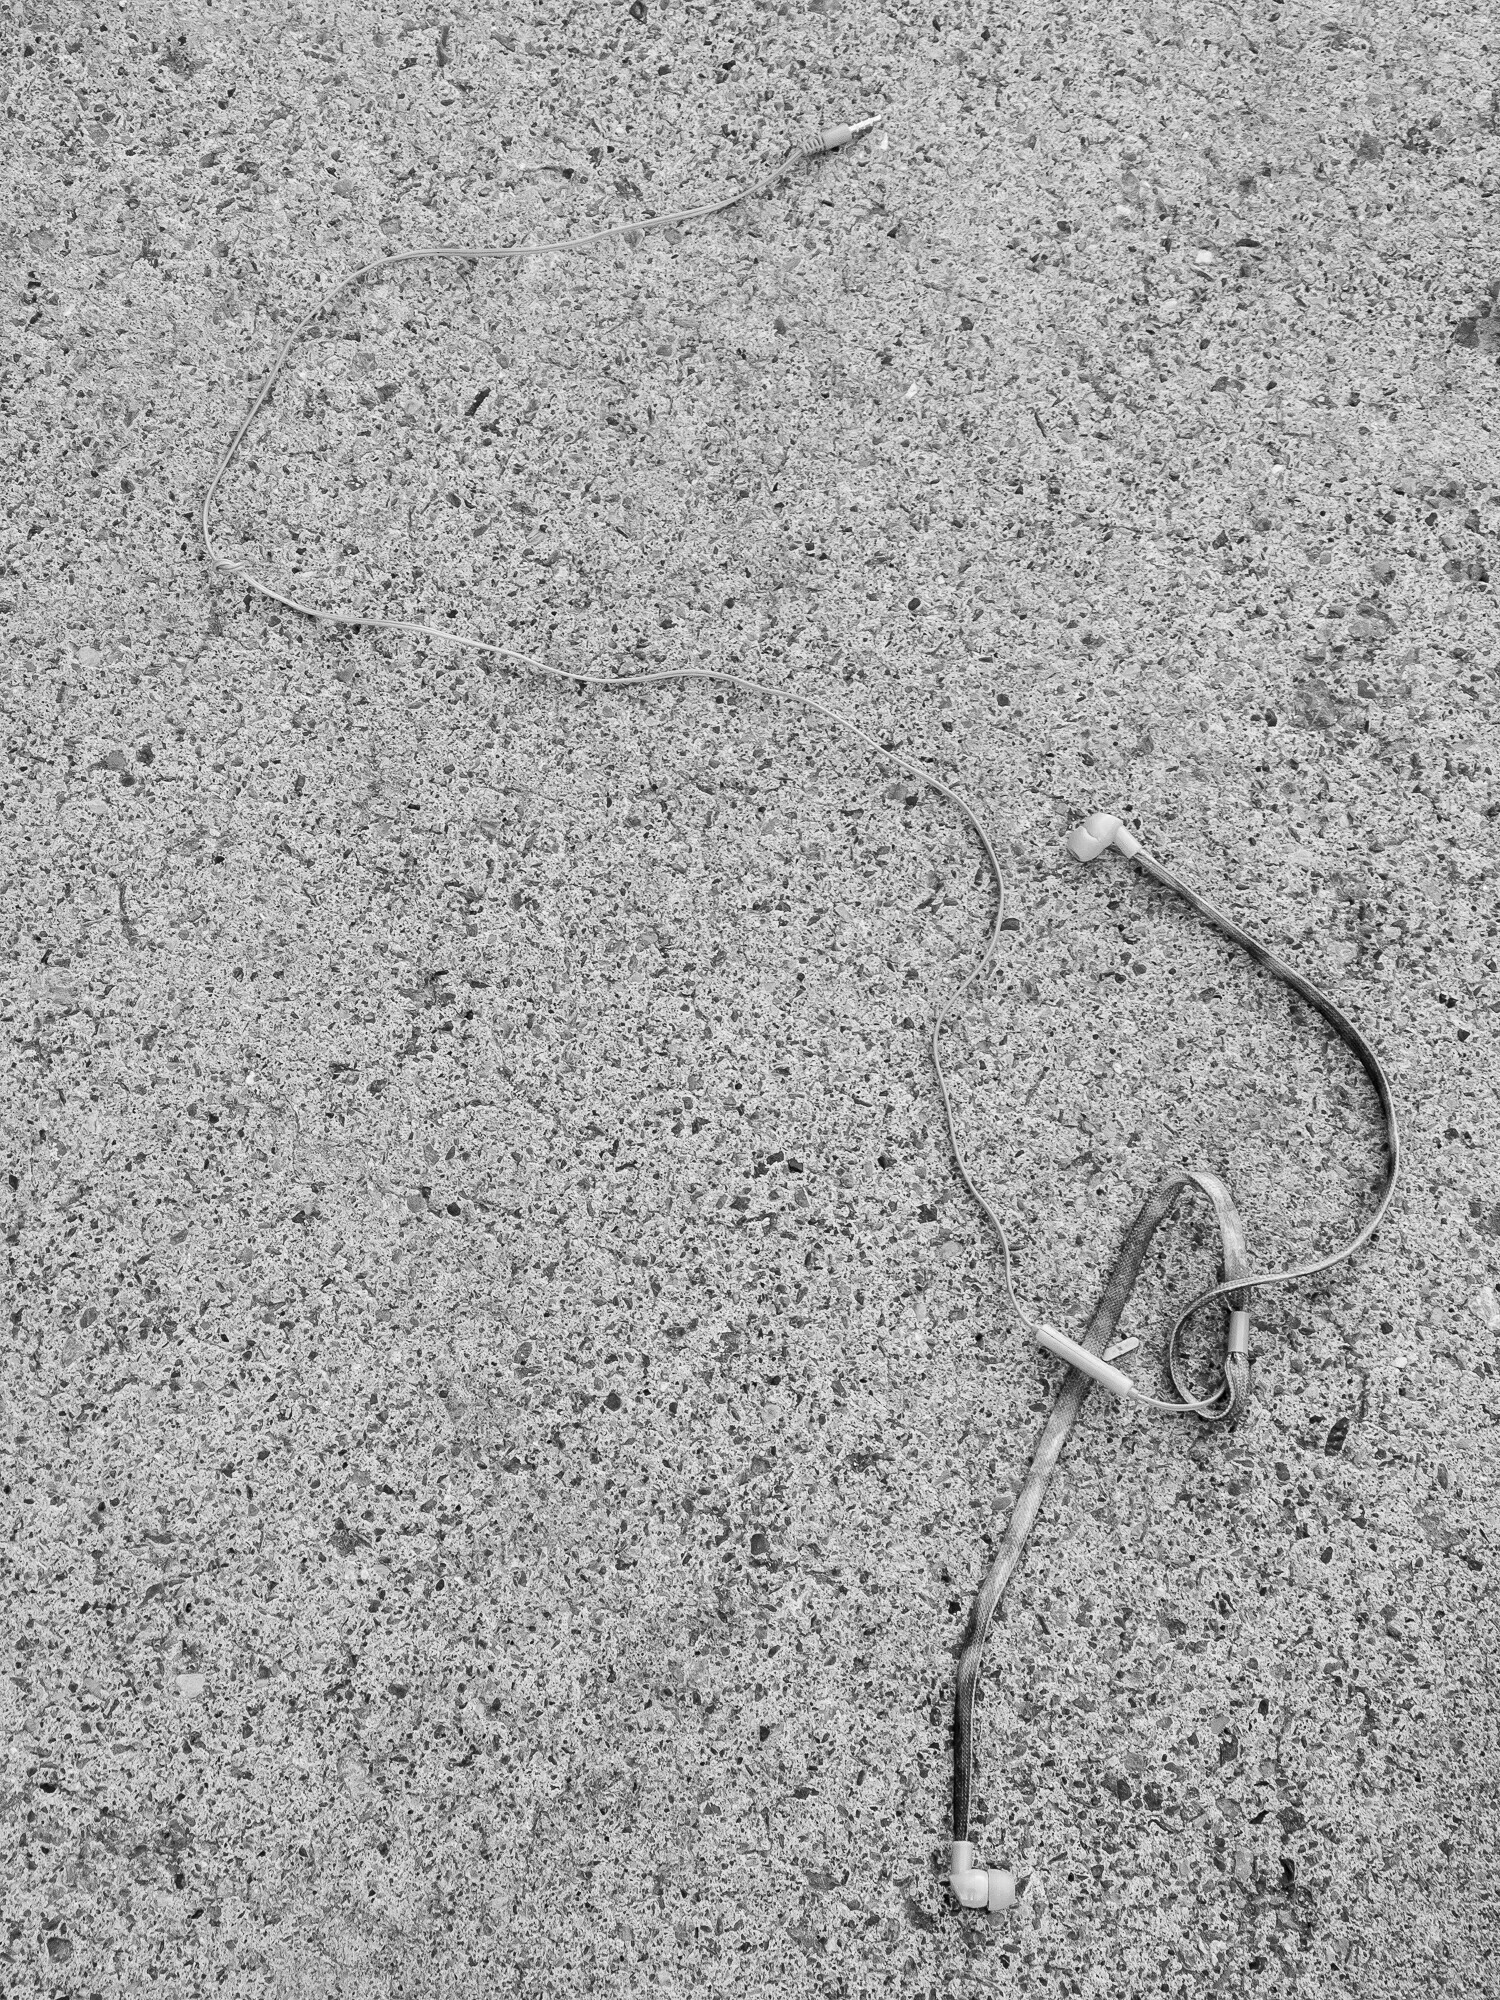 Earphone Detritus on Sidewalk